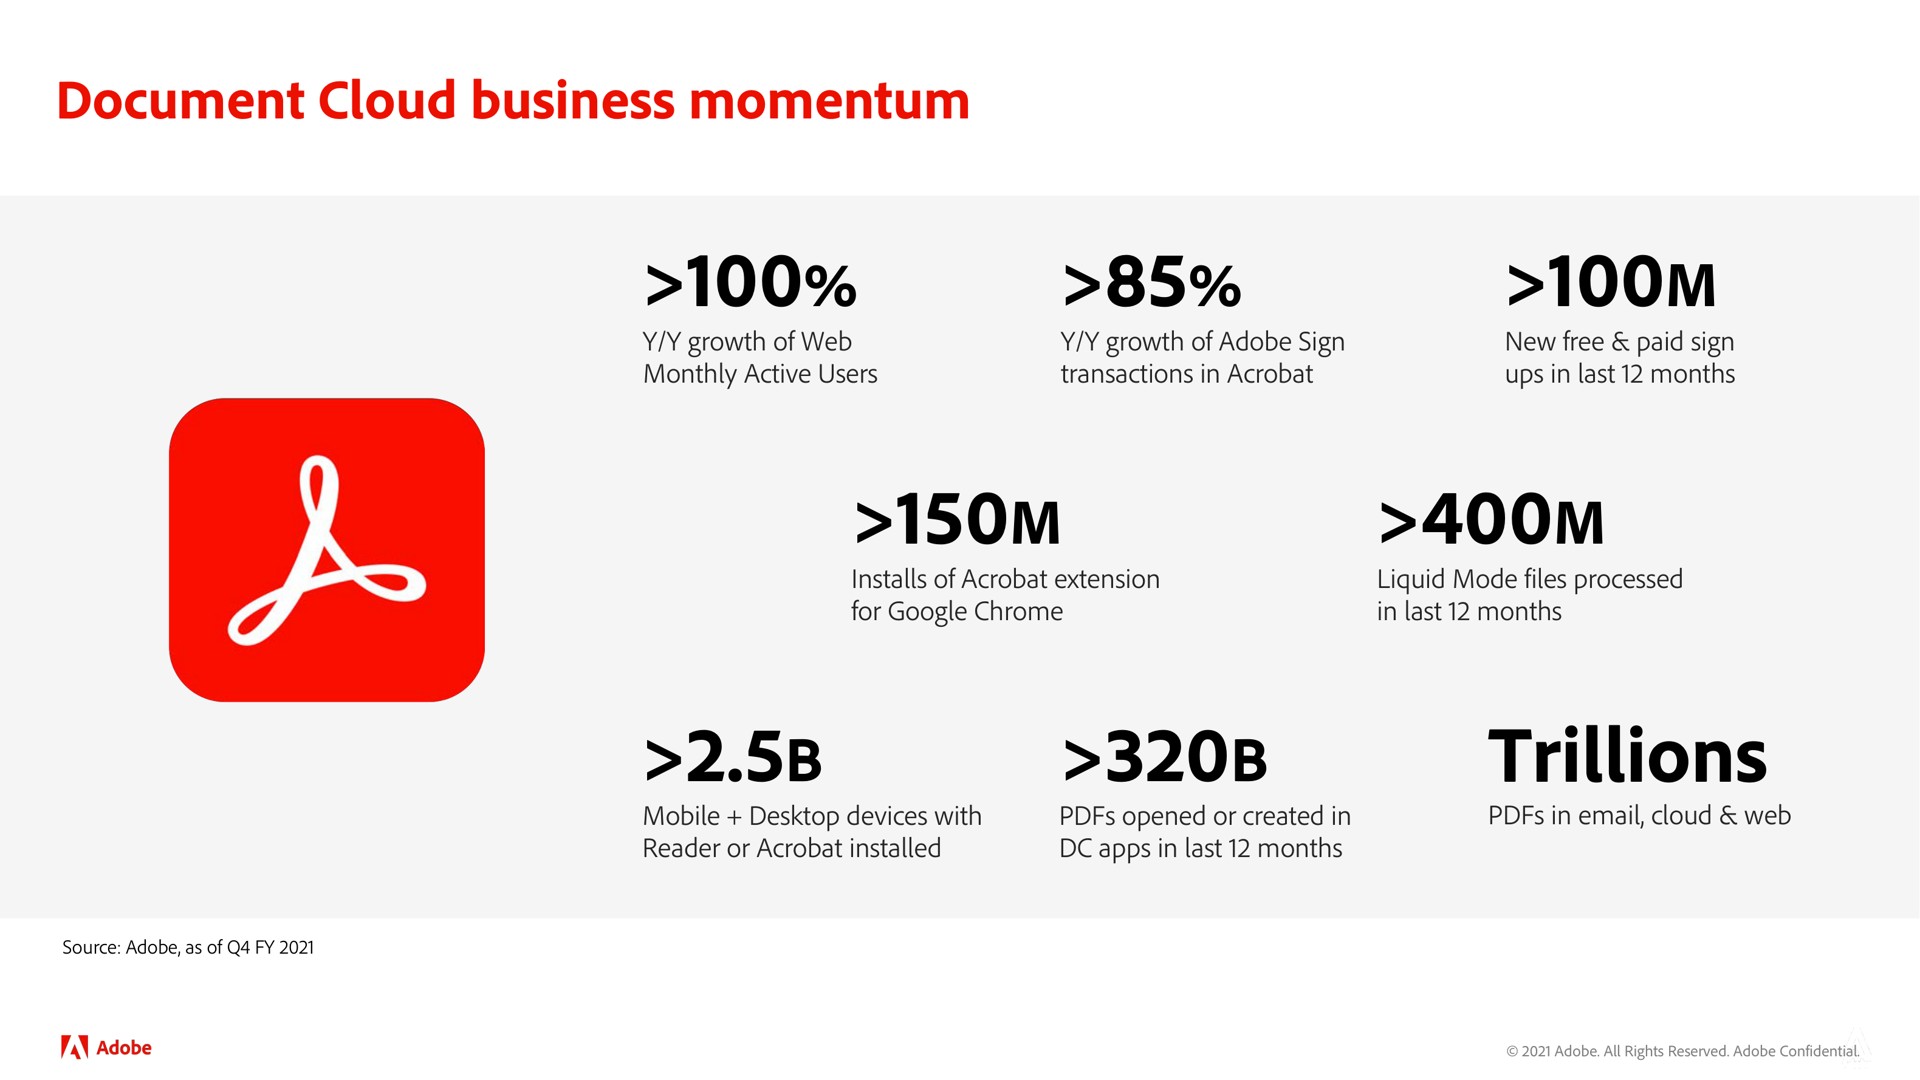 document cloud business momentum trillions | Adobe